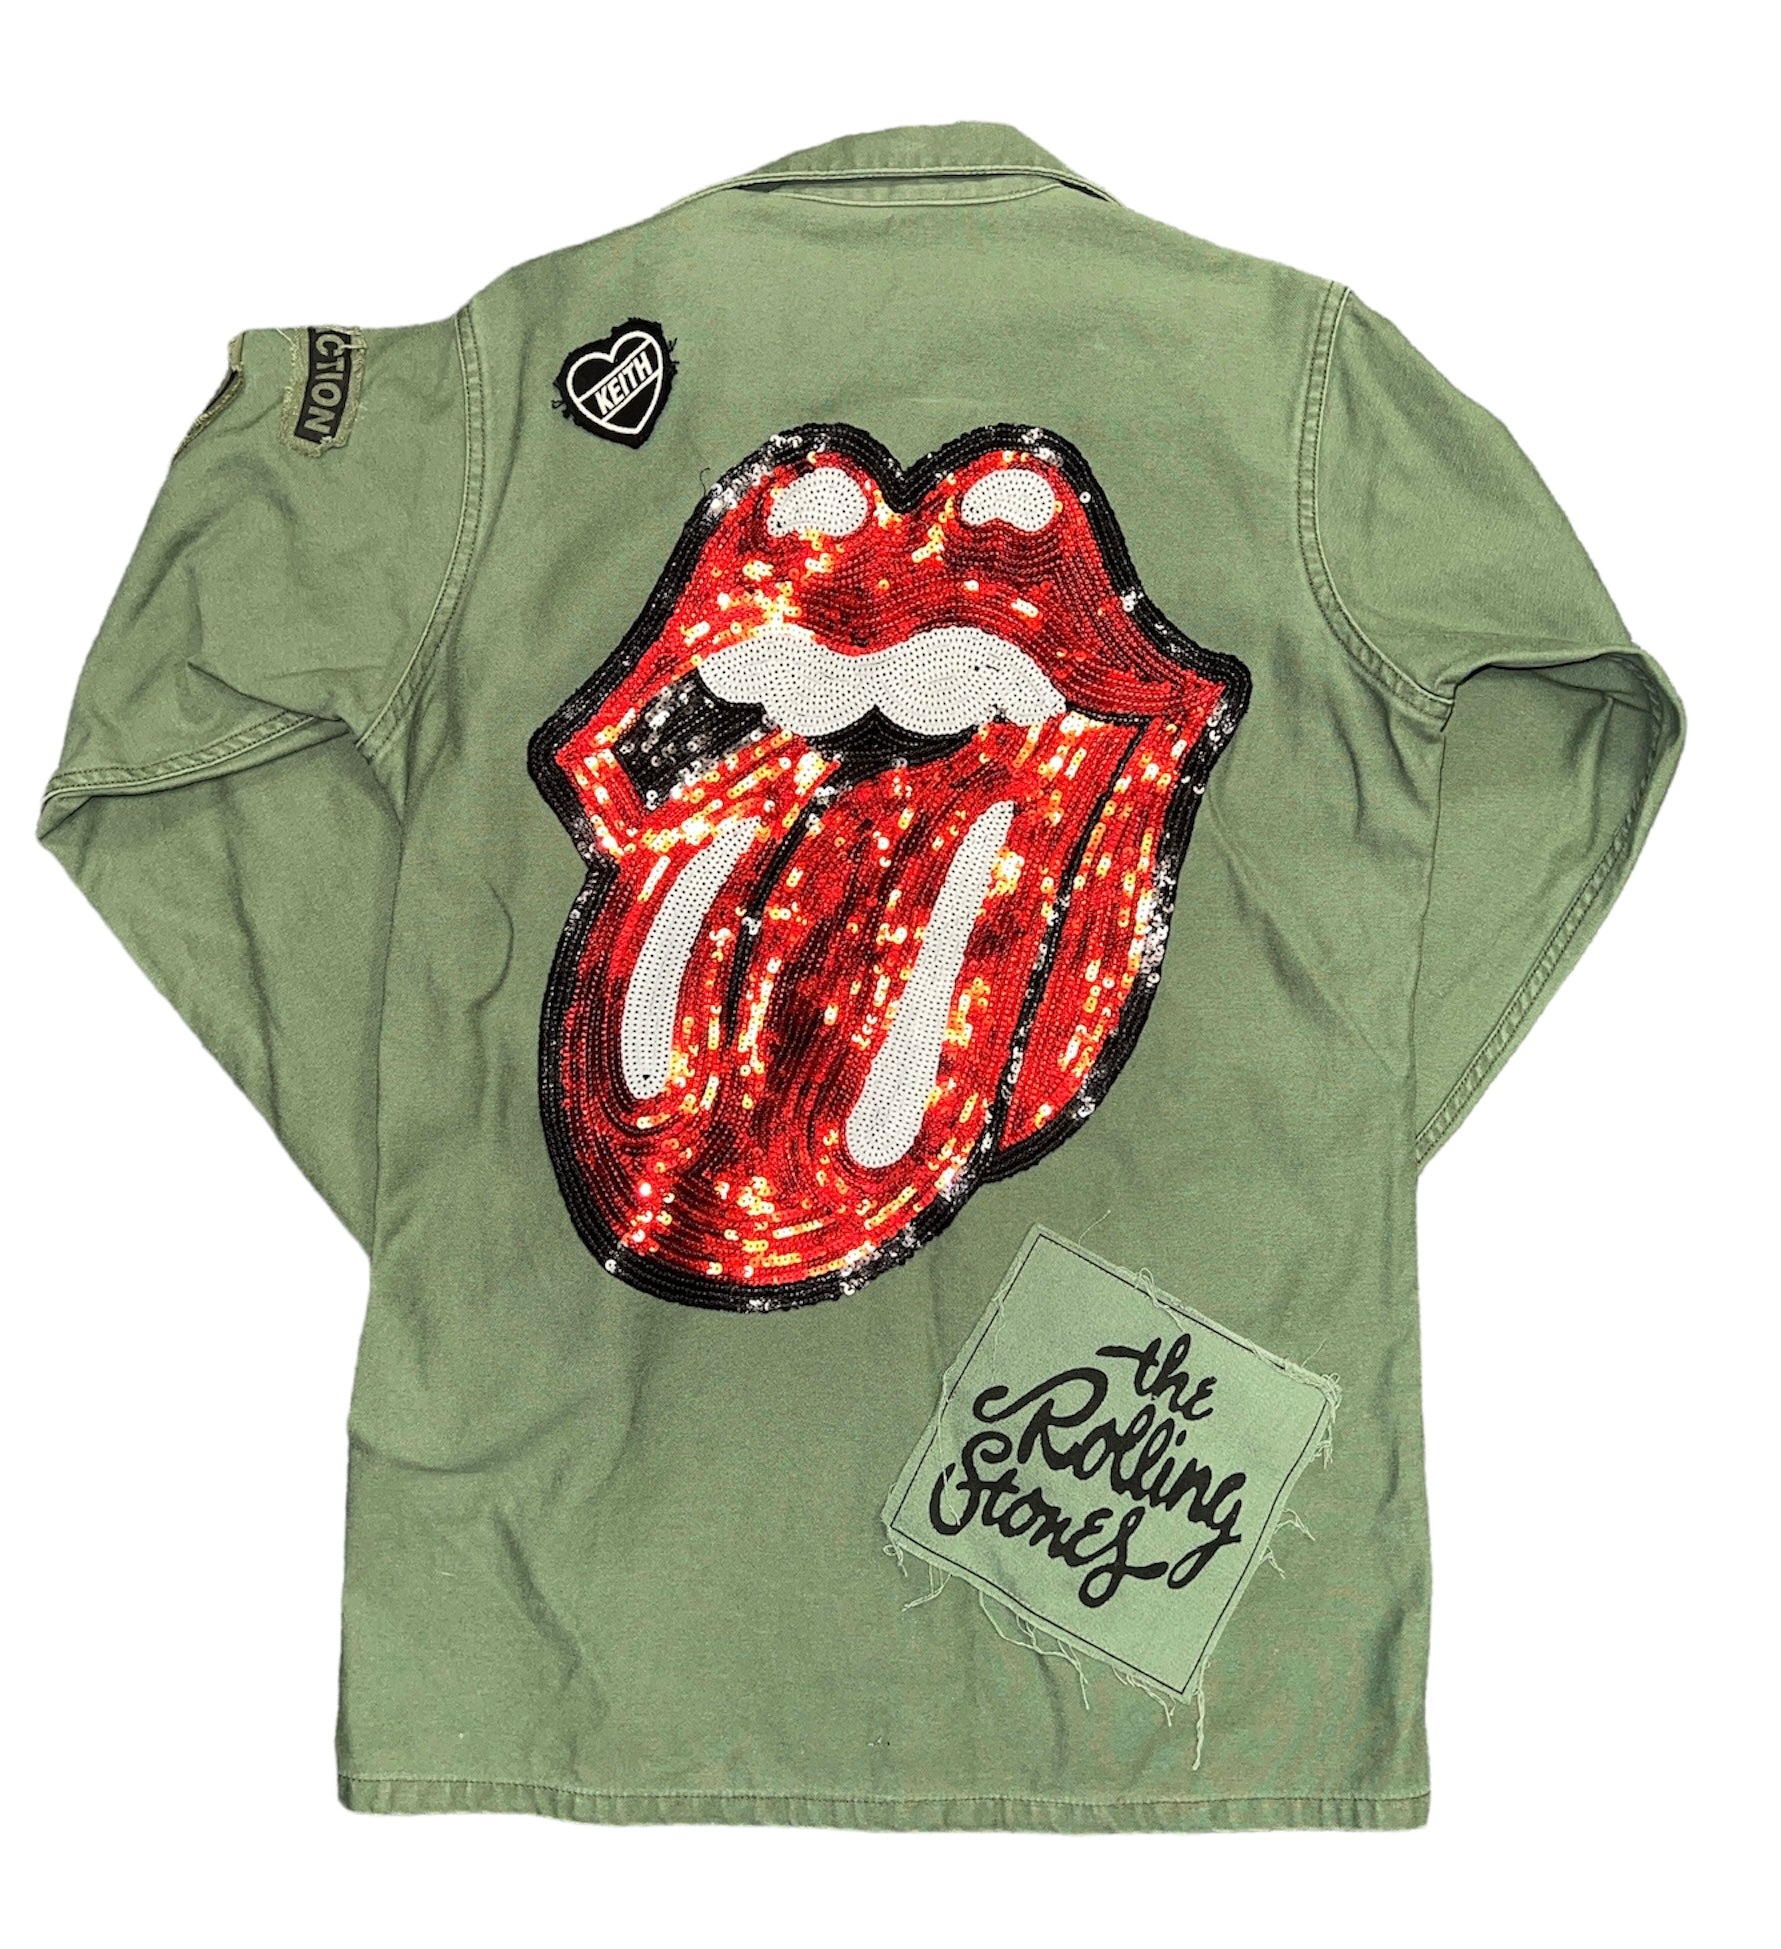 Madeworn Rolling Stones Military Jacket